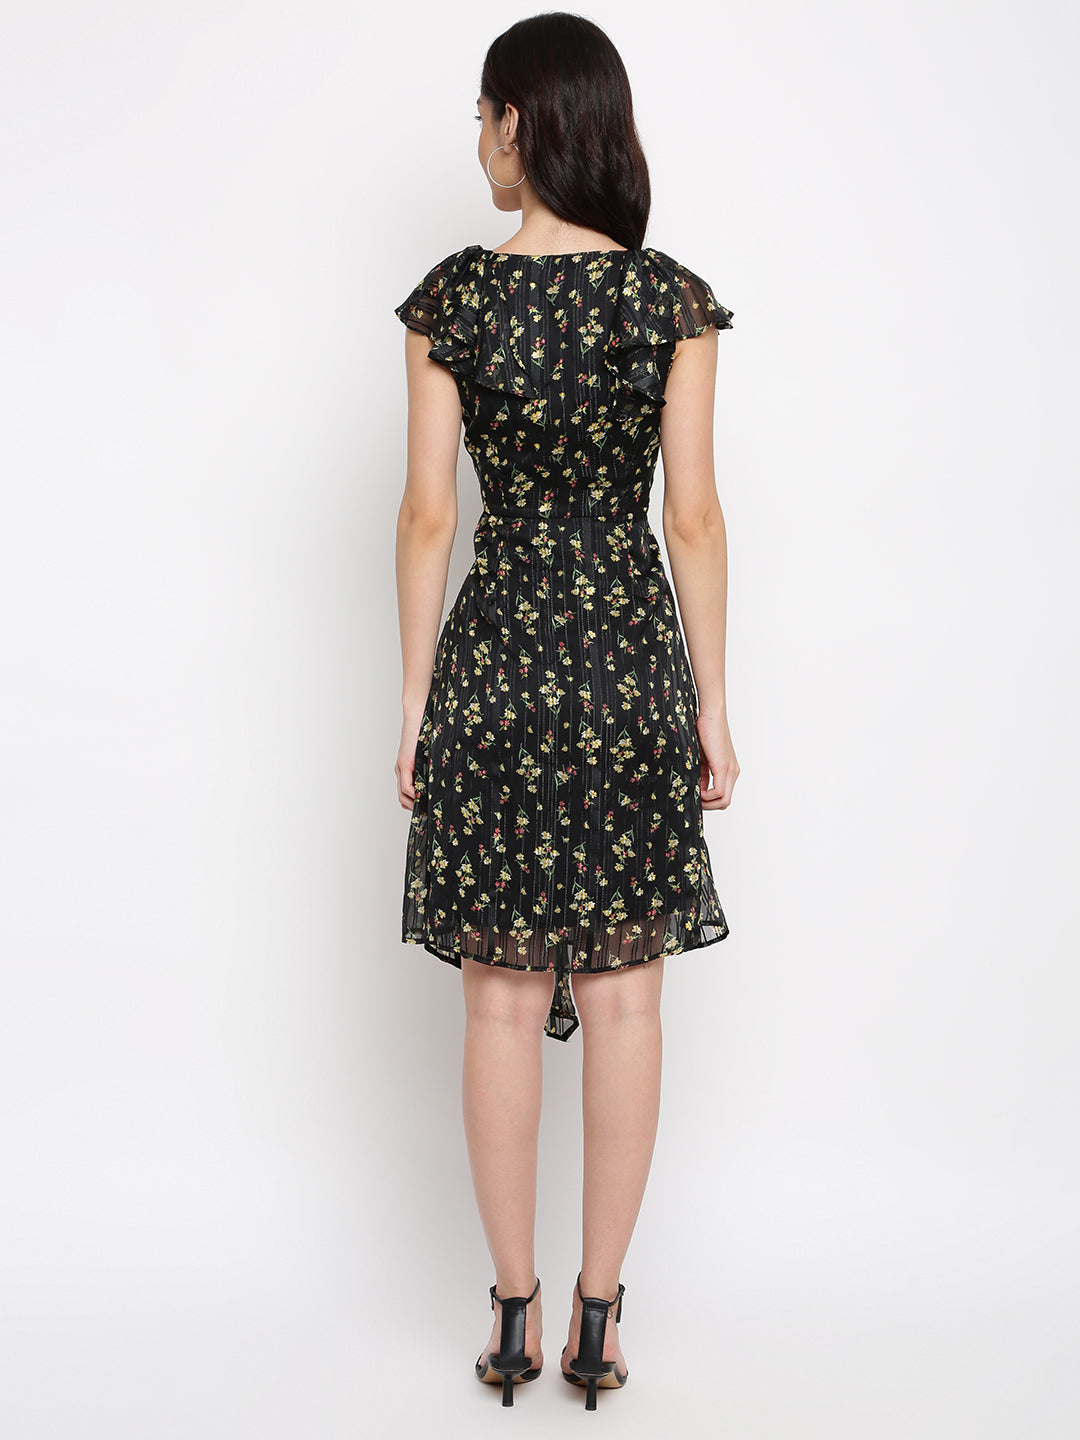 Black Half Sleeve A-Line Floral Dress